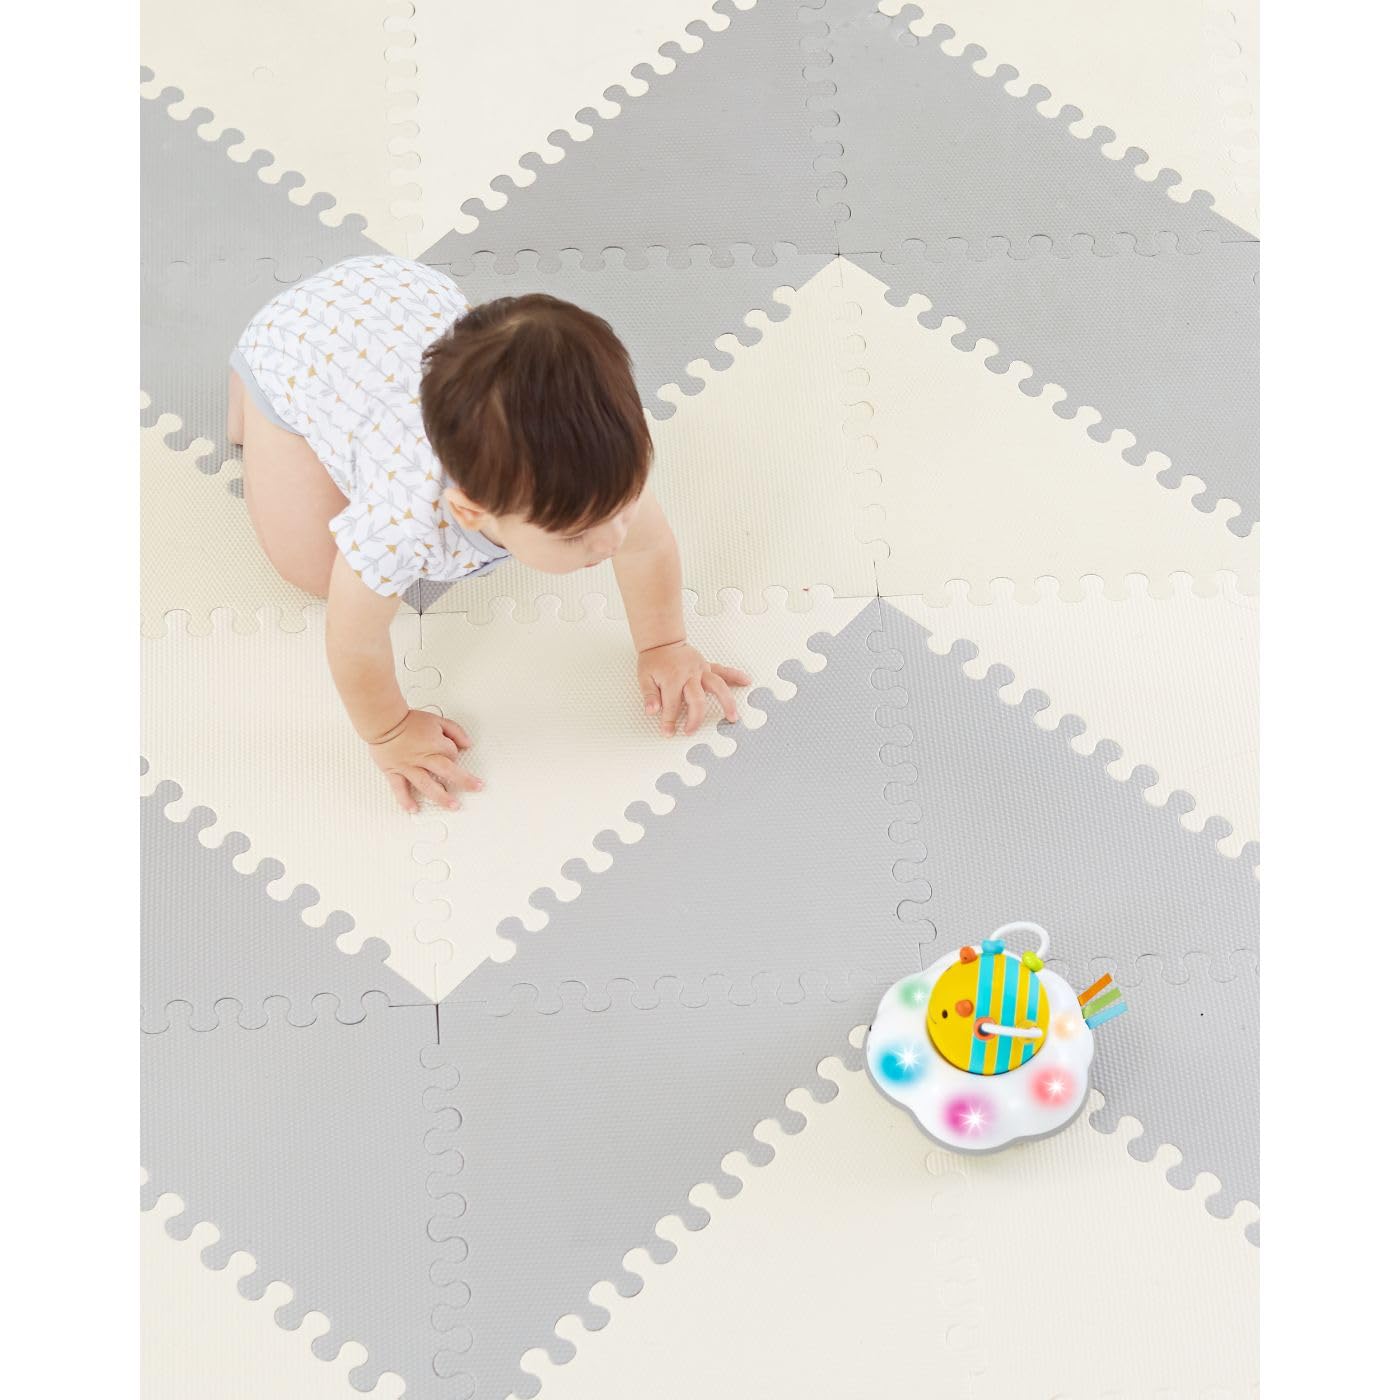 Skip Hop Baby Play Mat, Interlocking Foam Floor Tiles, 70